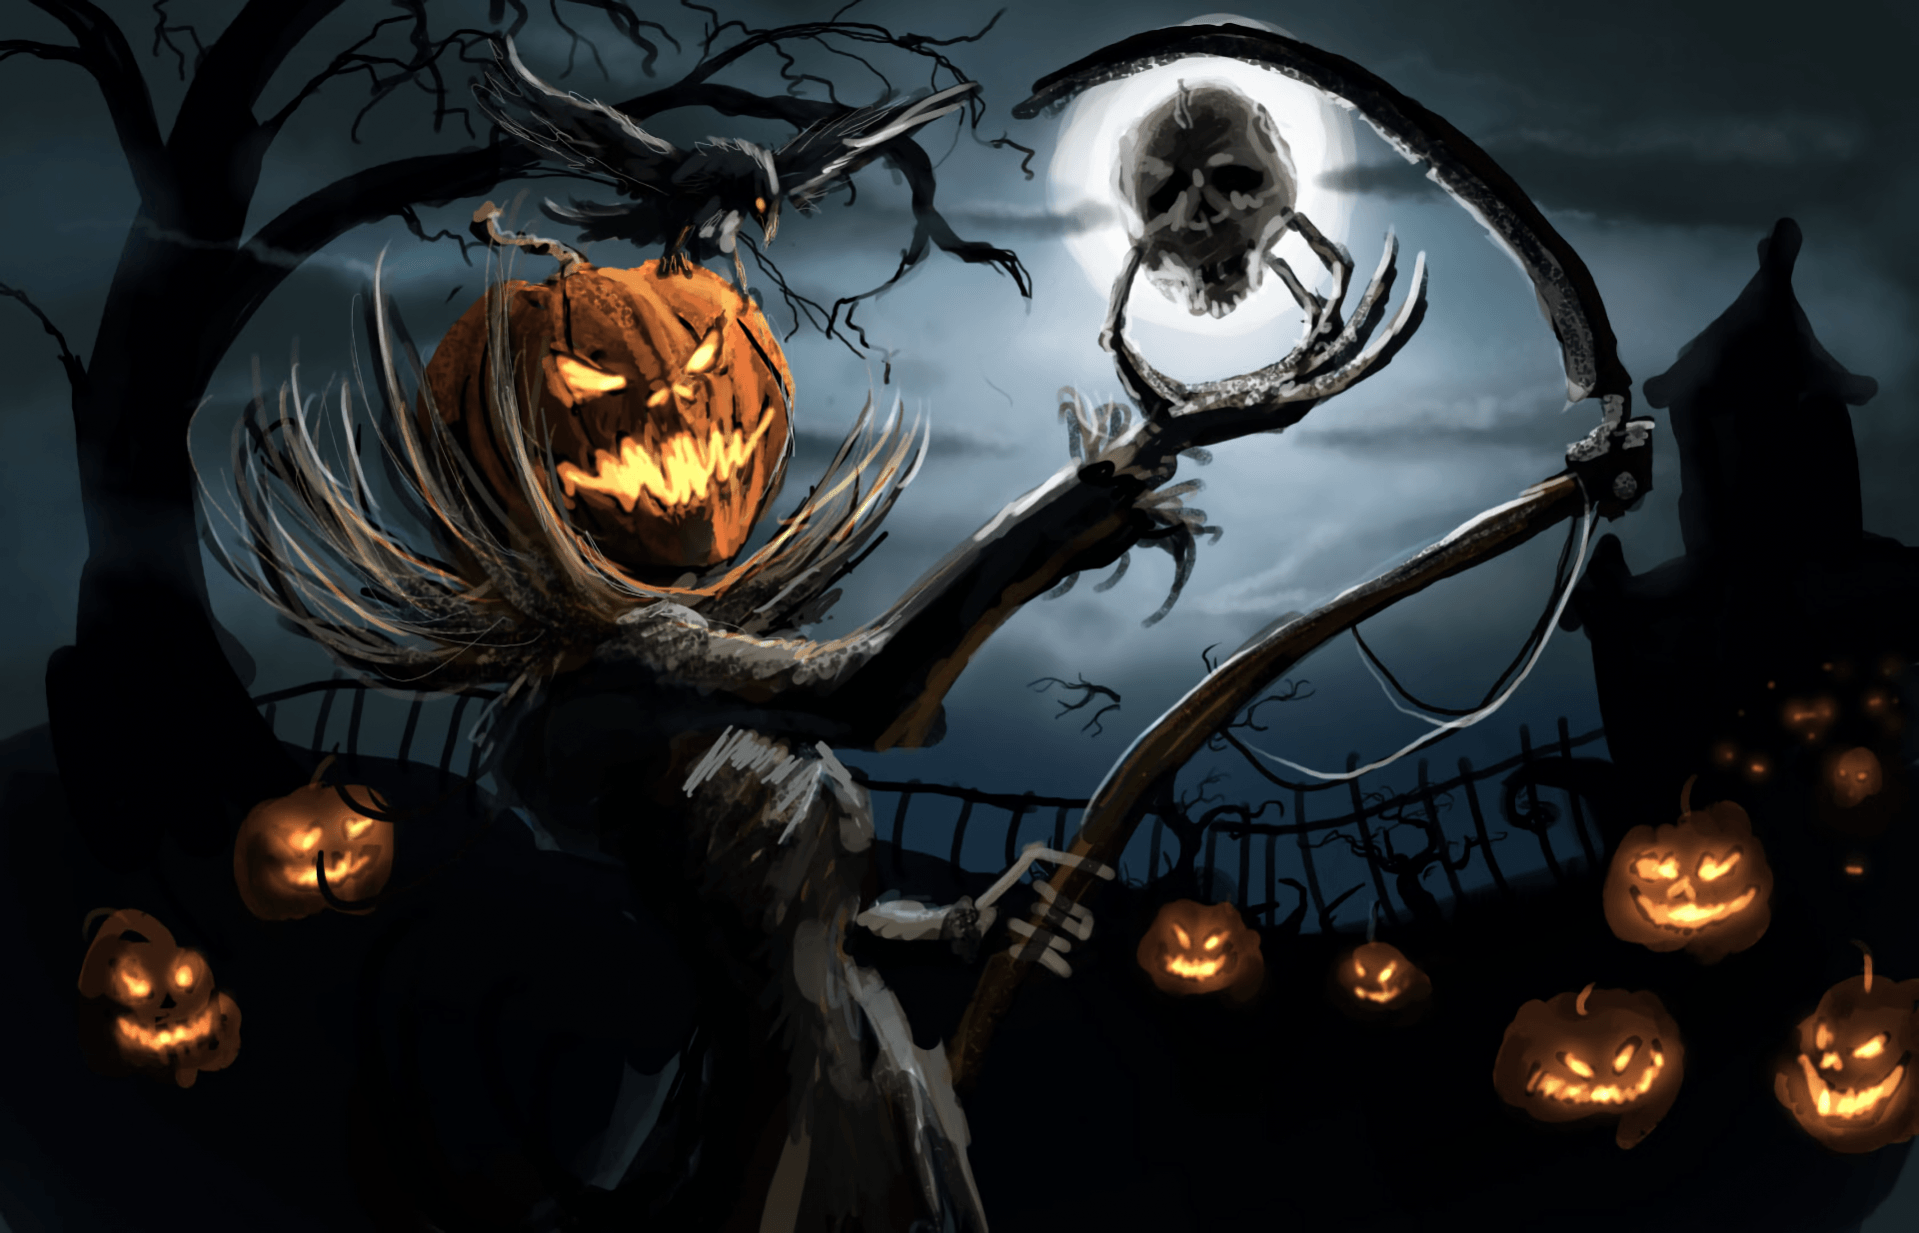 FREE Halloween Wallpaper in PSD